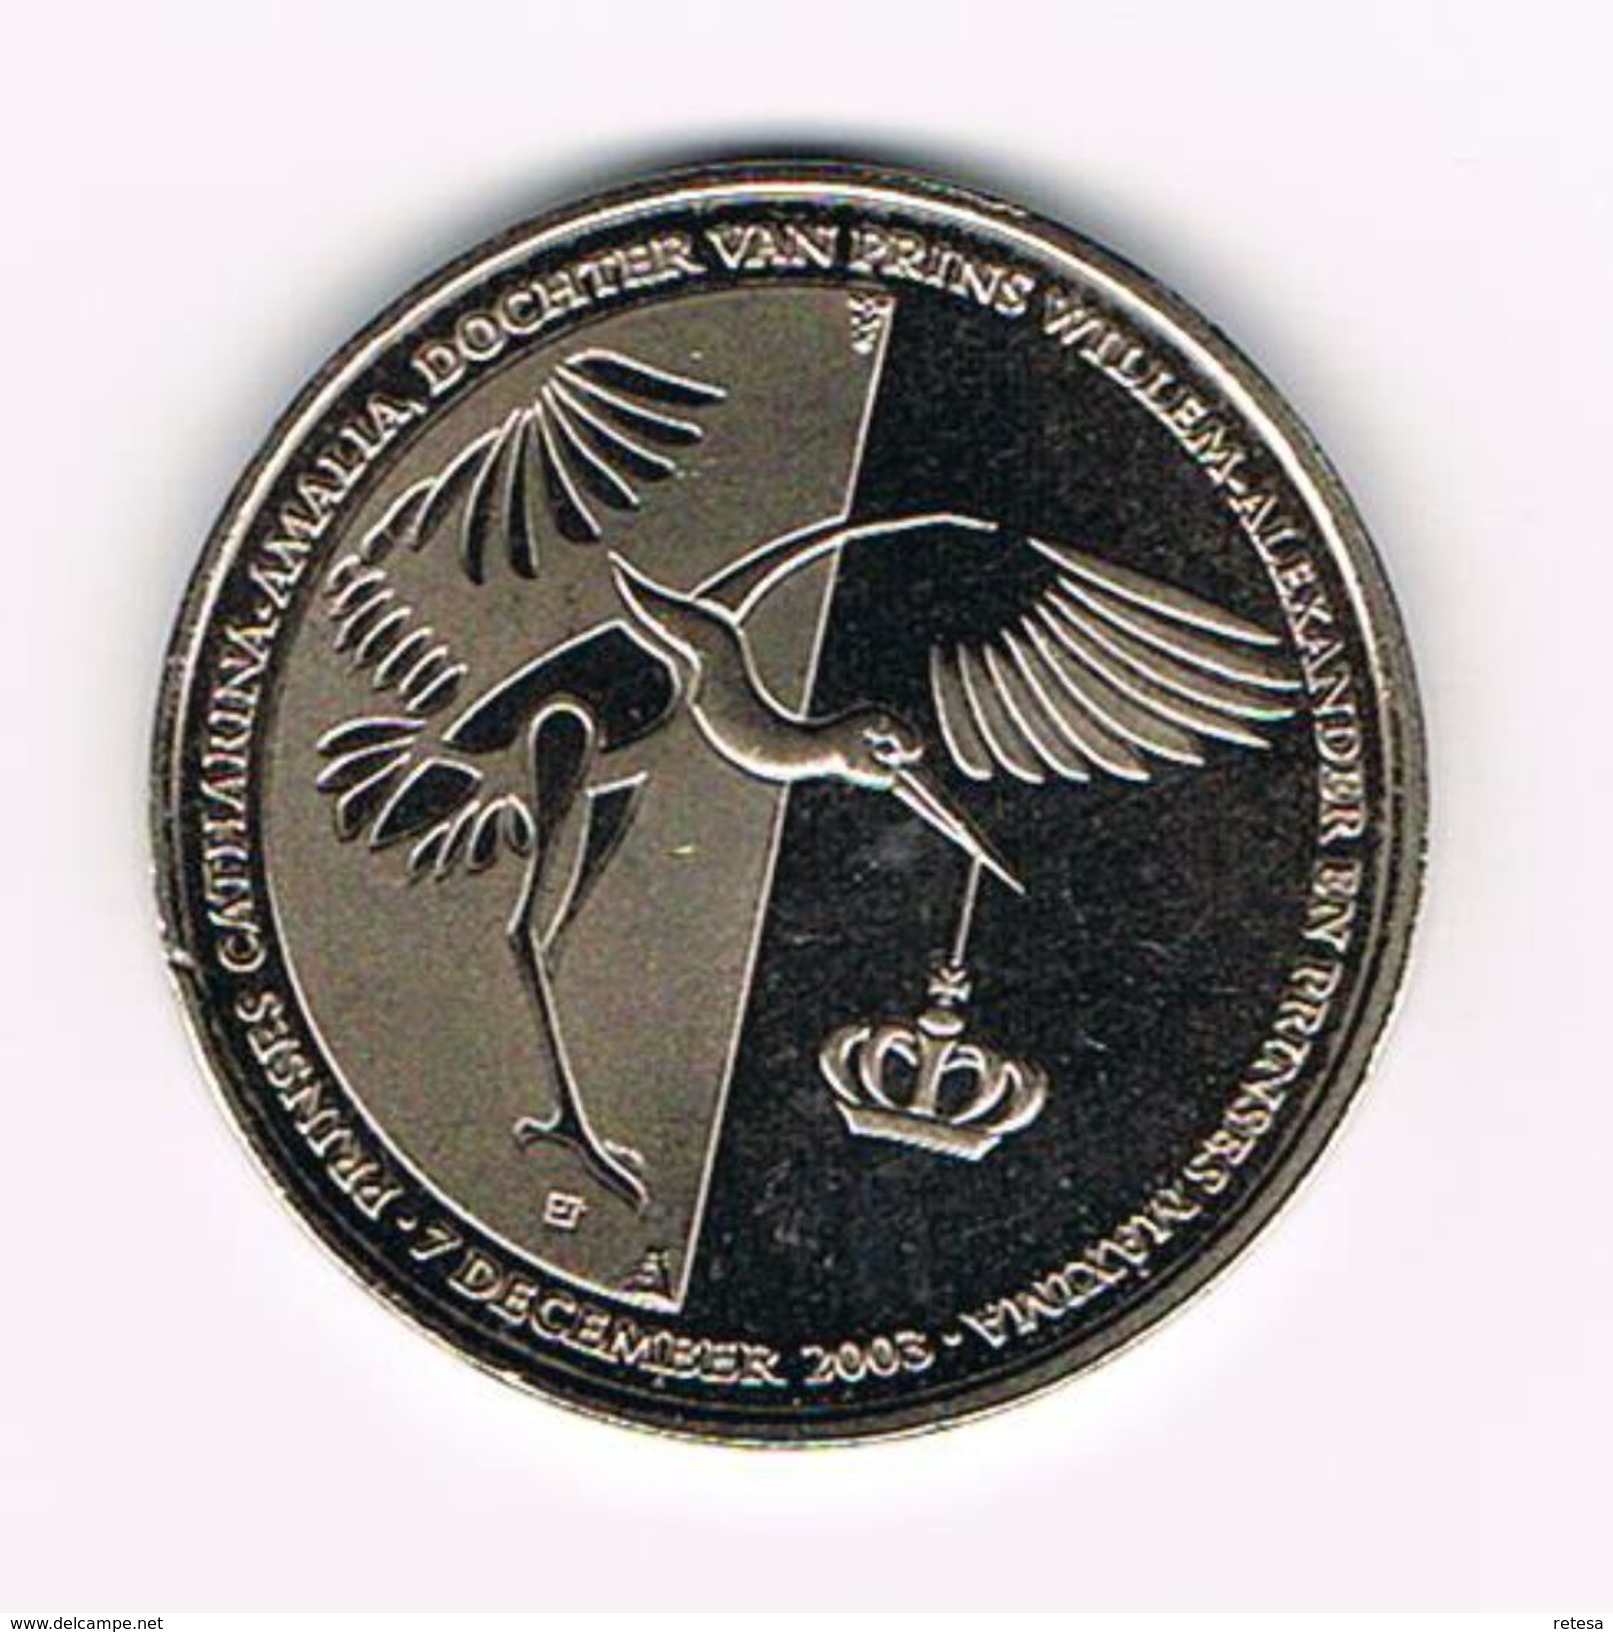 ¨¨ NEDERLAND  HERDENKINGSMUNT  GEBOORTE  PRINSES AMALIA 7 DECEMBER  2003 - Elongated Coins